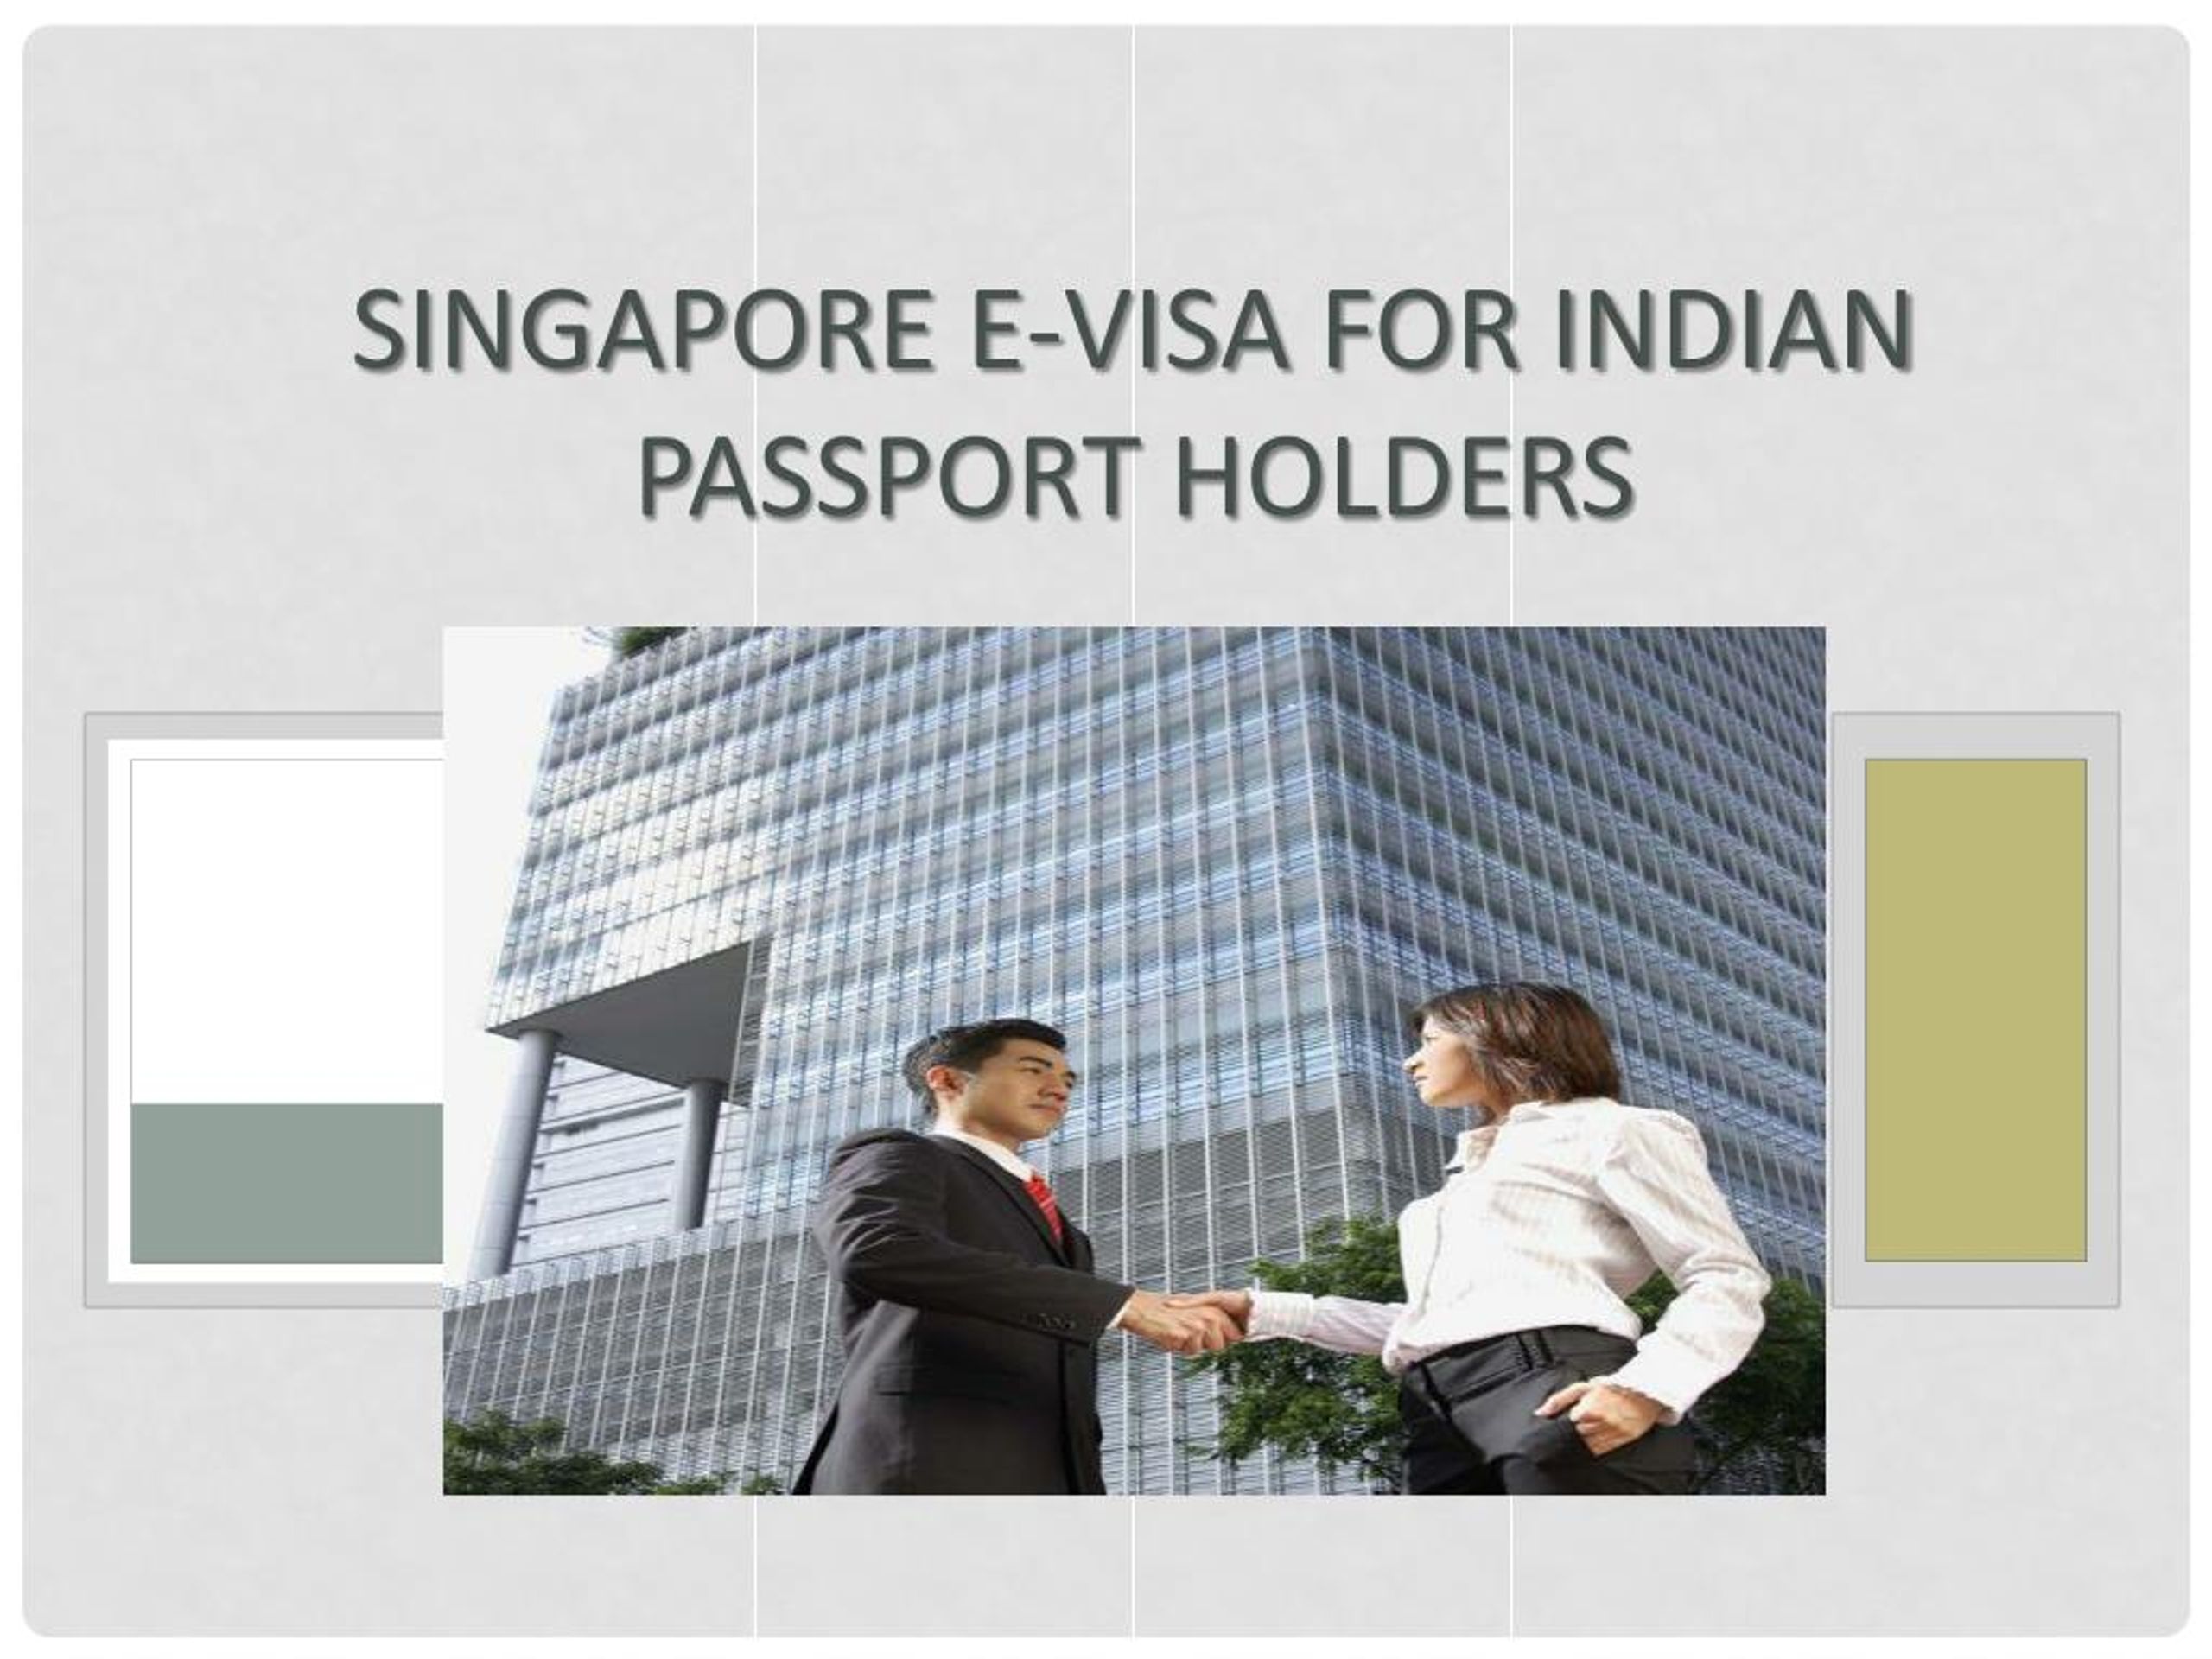 indian passport holder travel to singapore